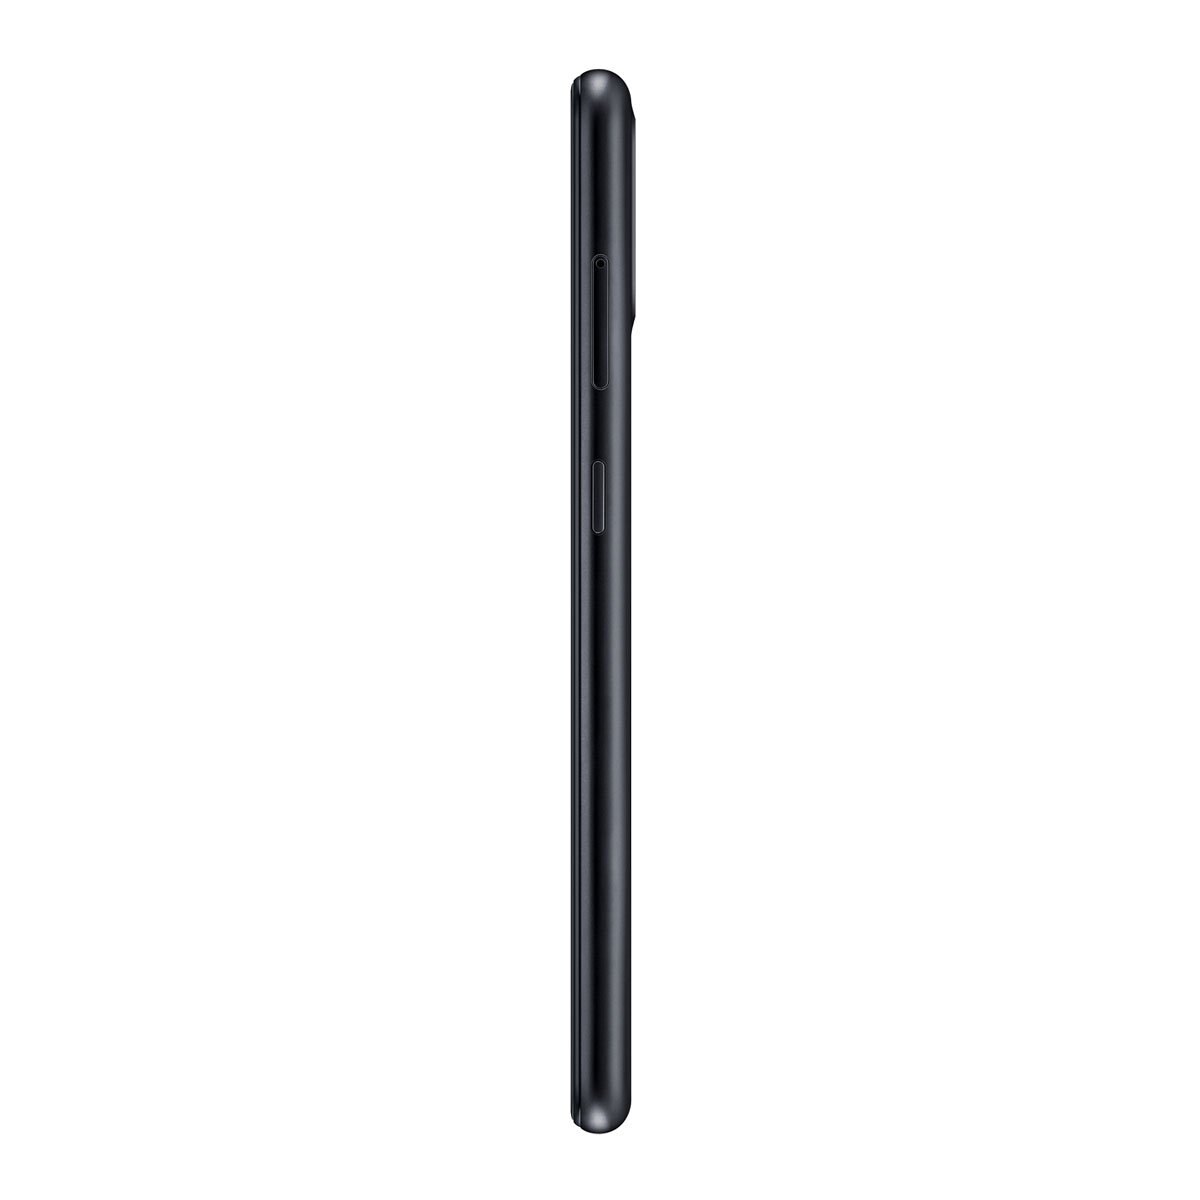 Celular Samsung Galaxy A01 A015M Color Negro R9 (Telcel)